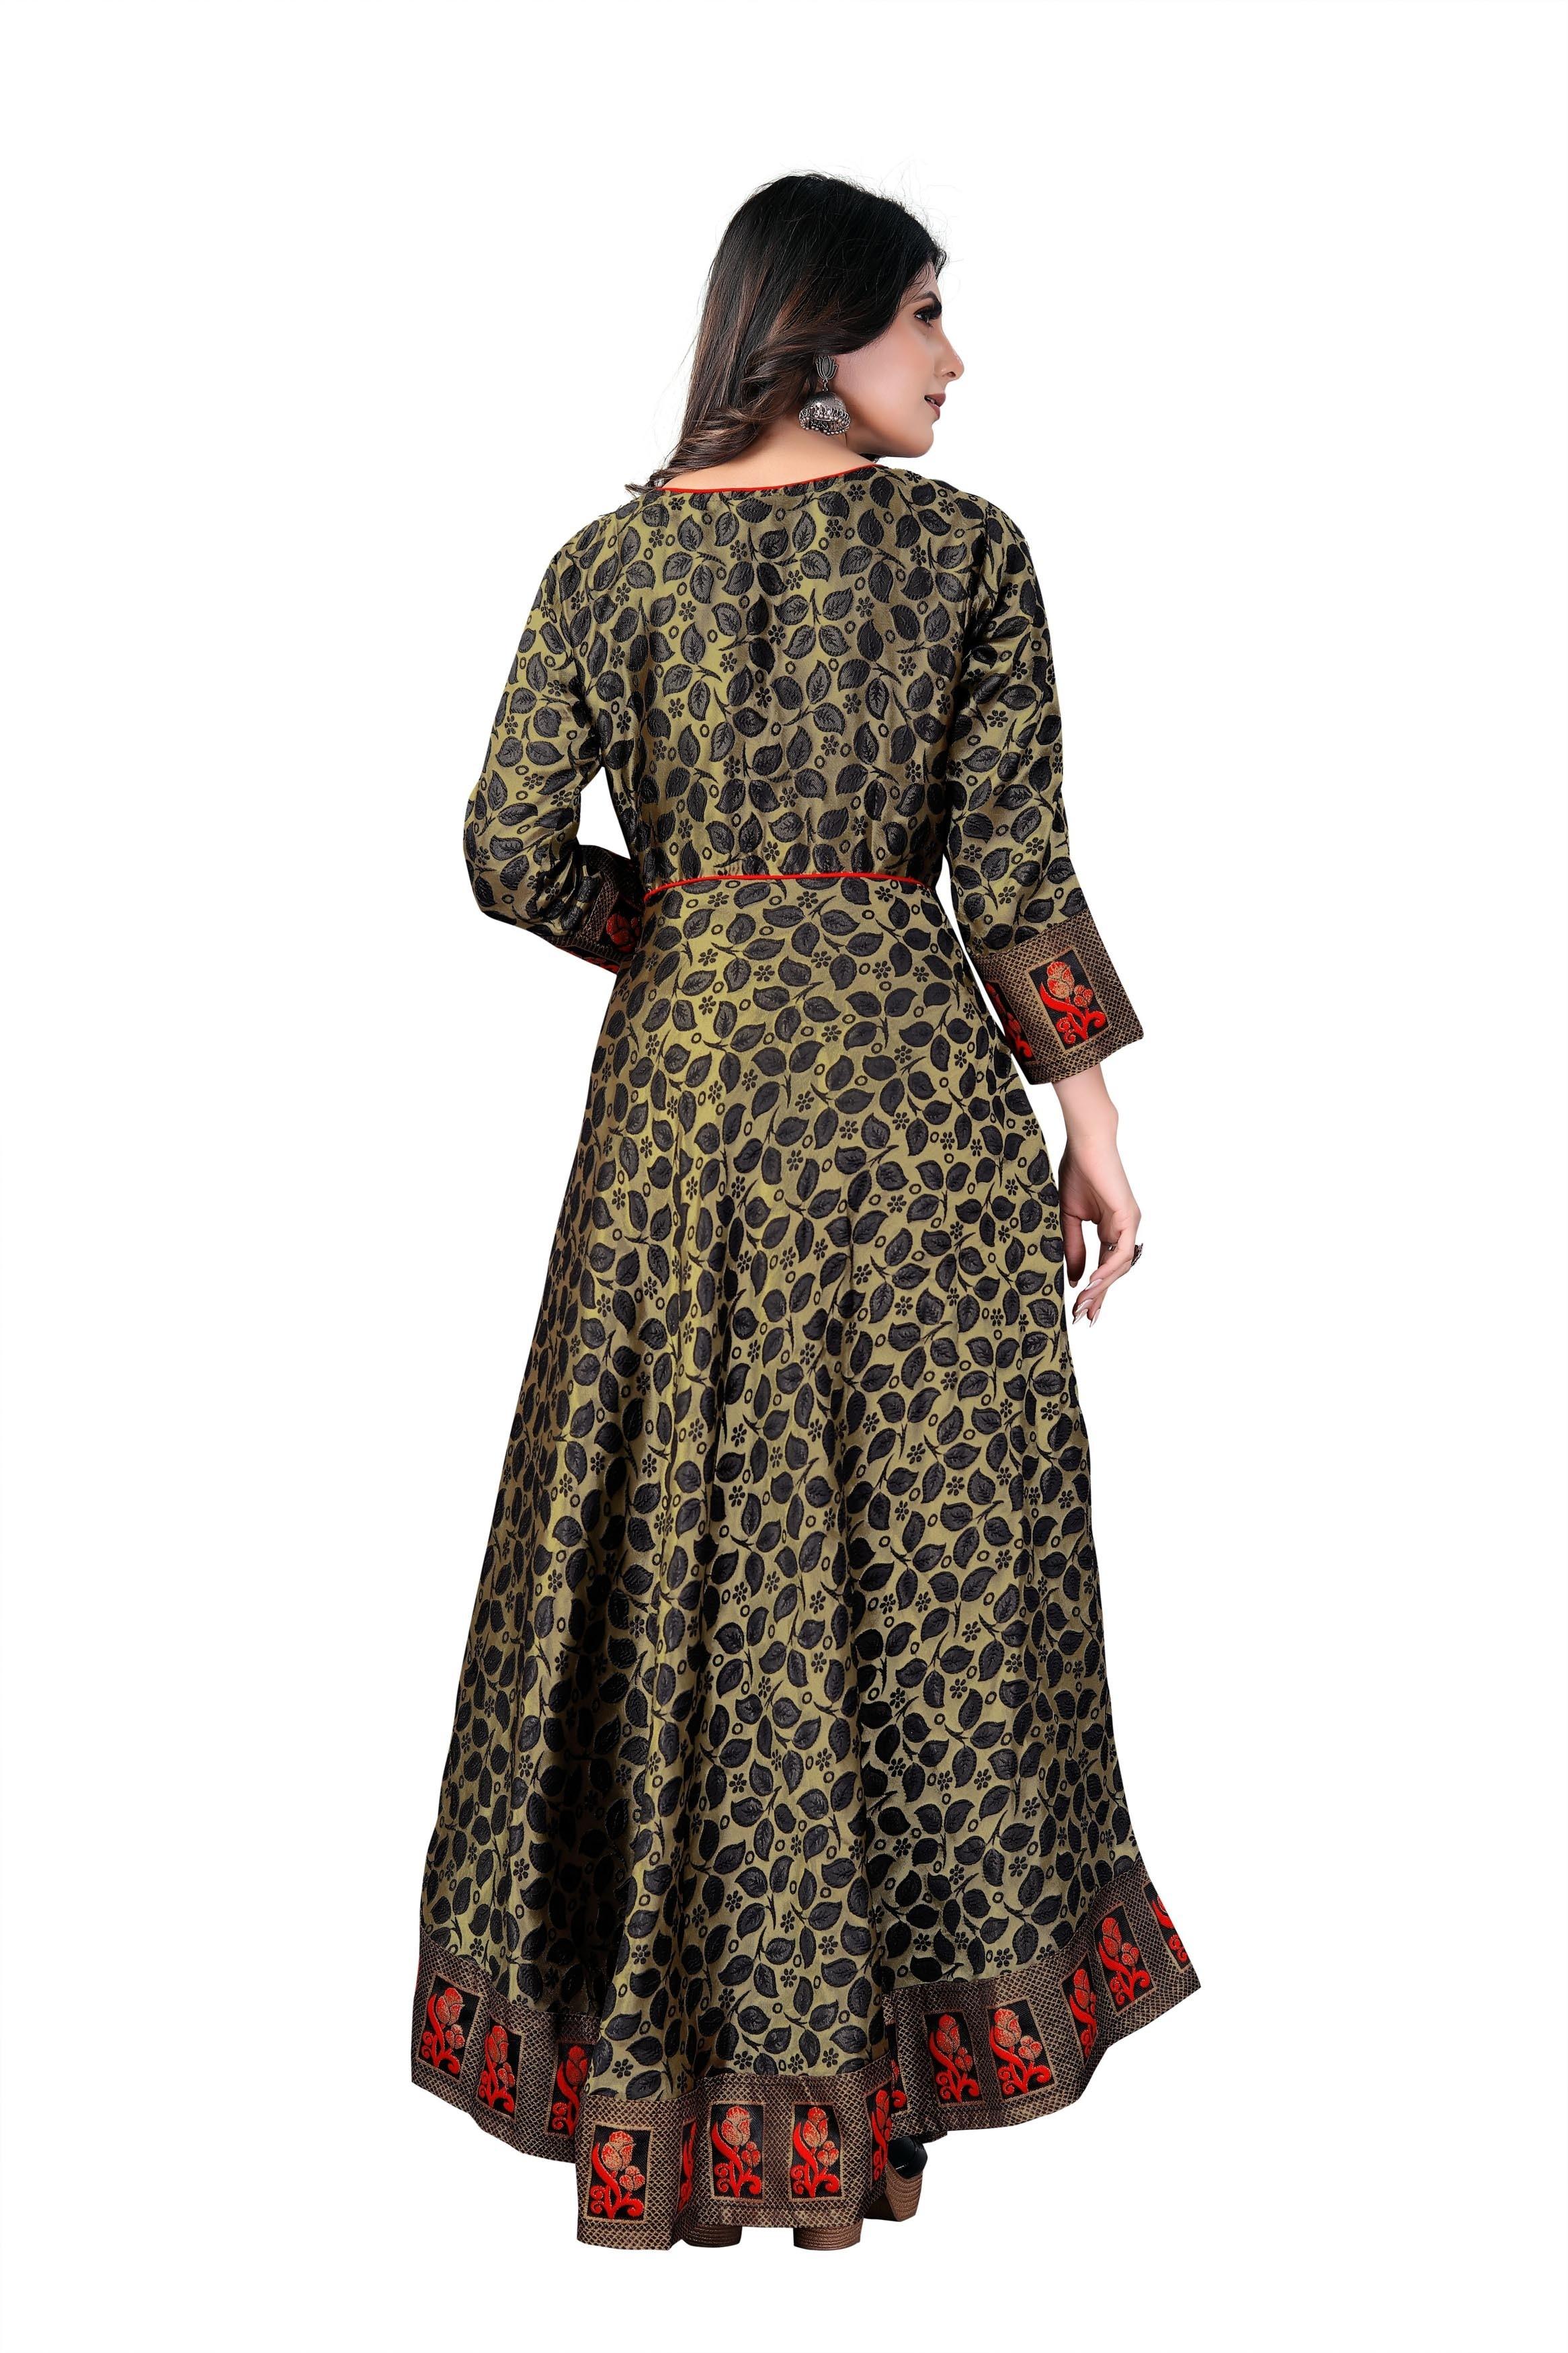 Shivax Impex Women Black Printed Jacquard Anarkali Gown (Xl) - JioMart